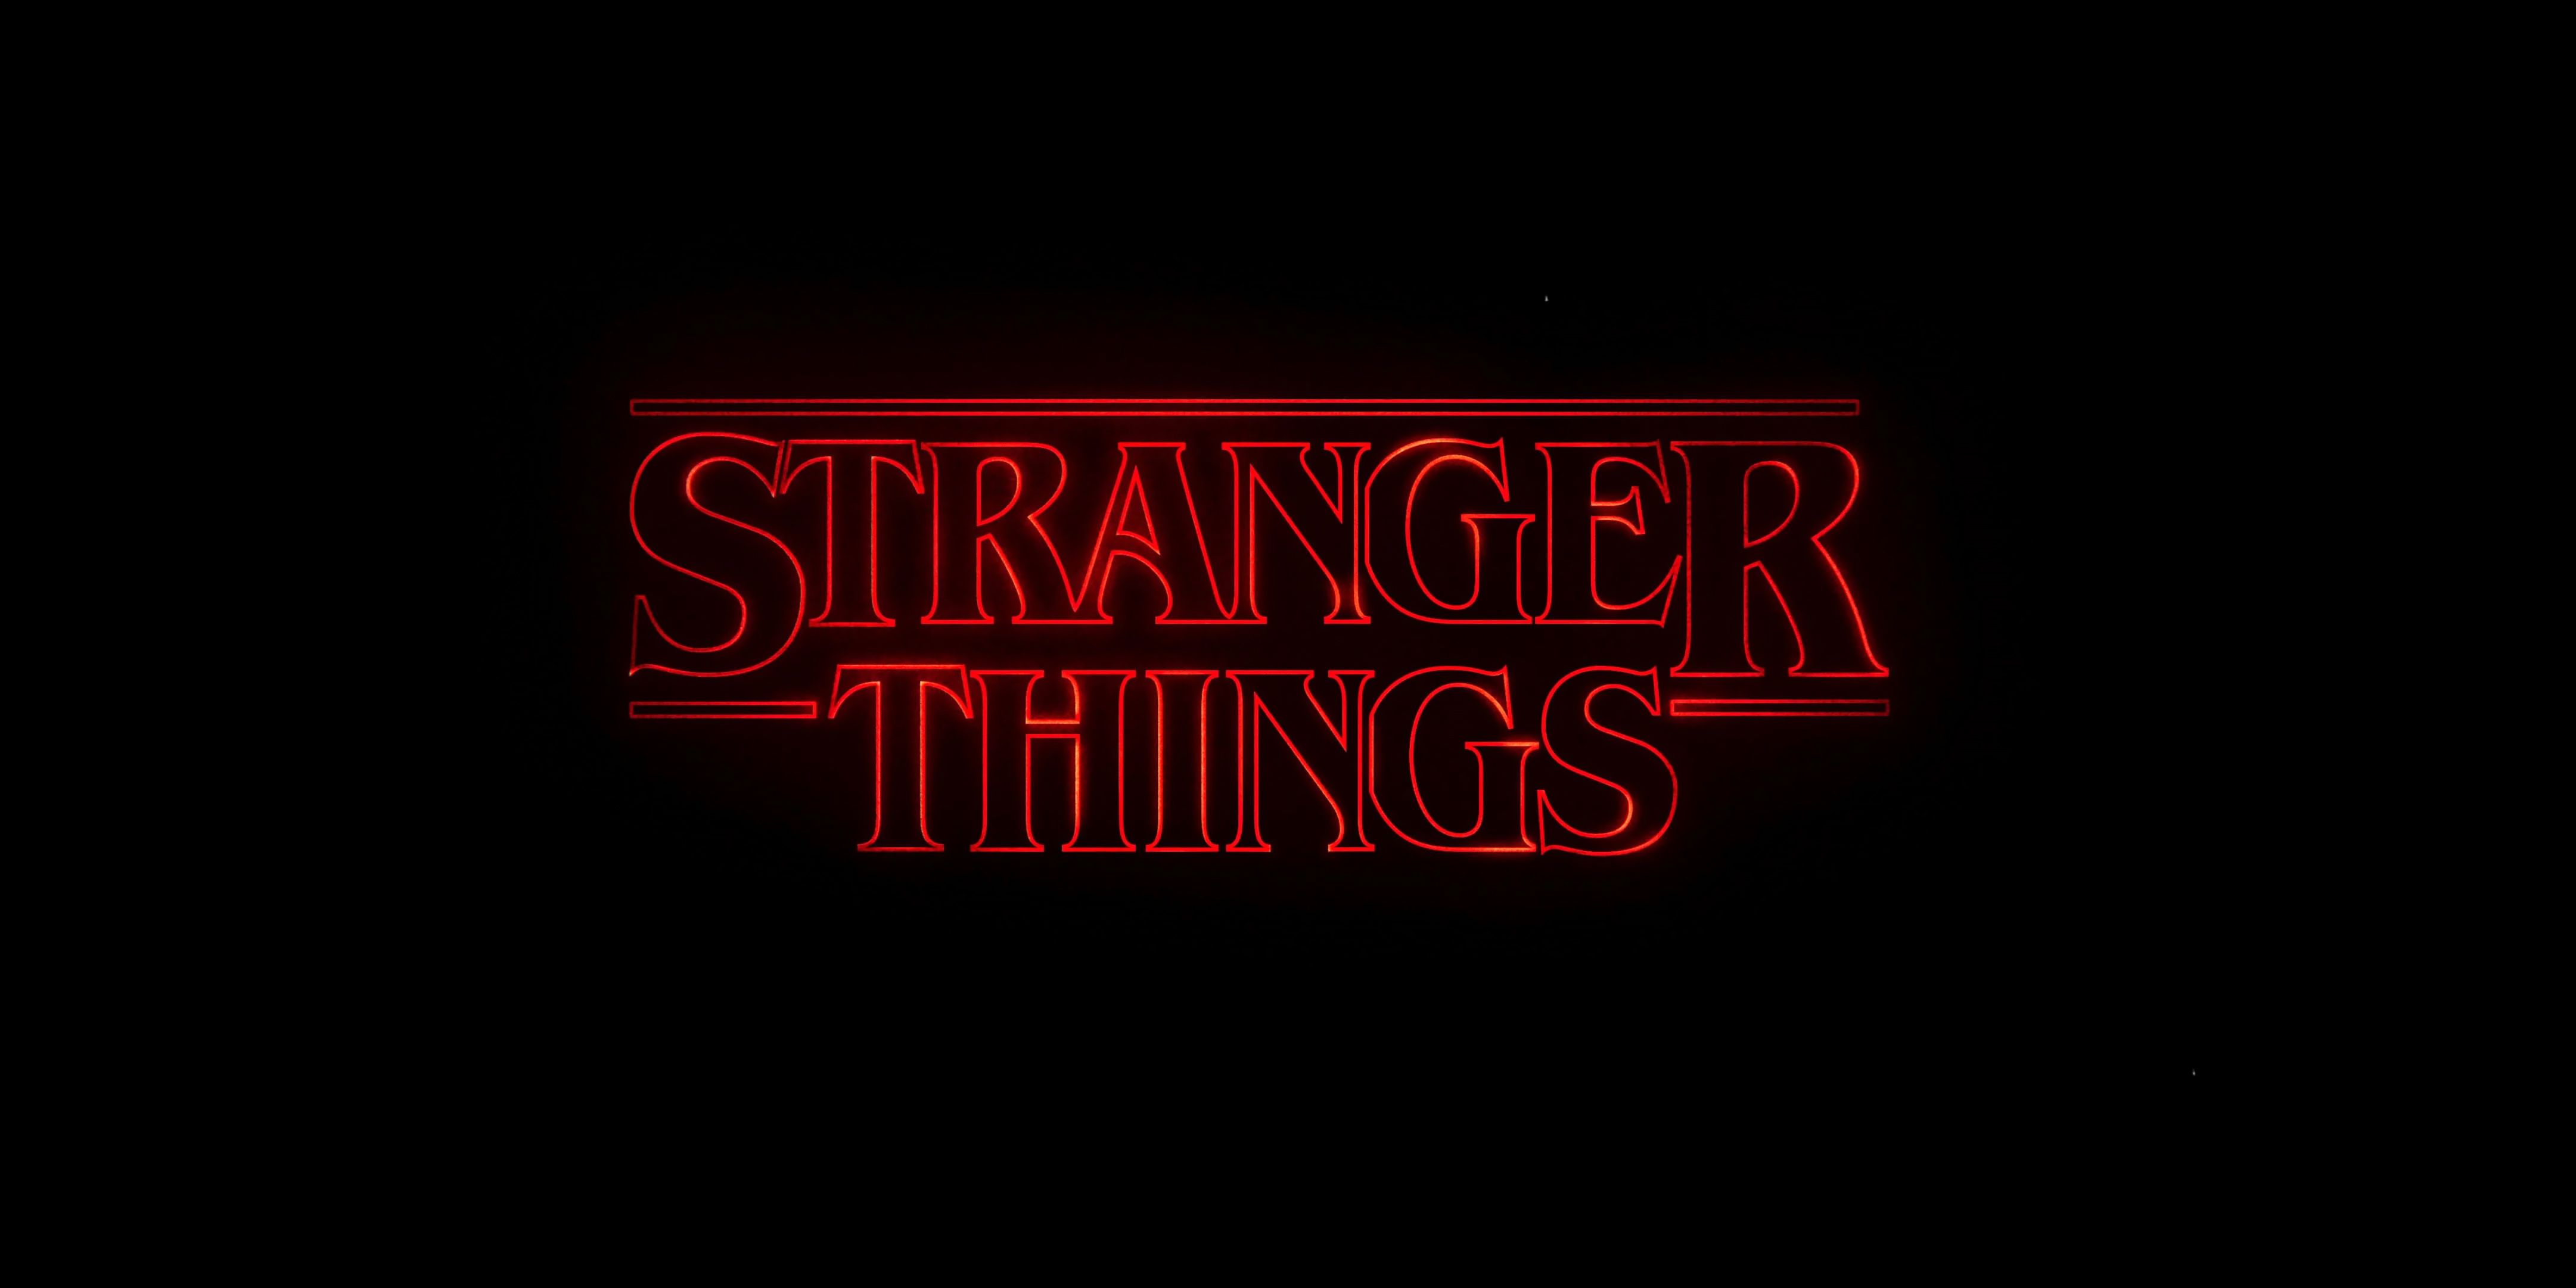 Stranger things logo wallpaper 1920x654 - Netflix